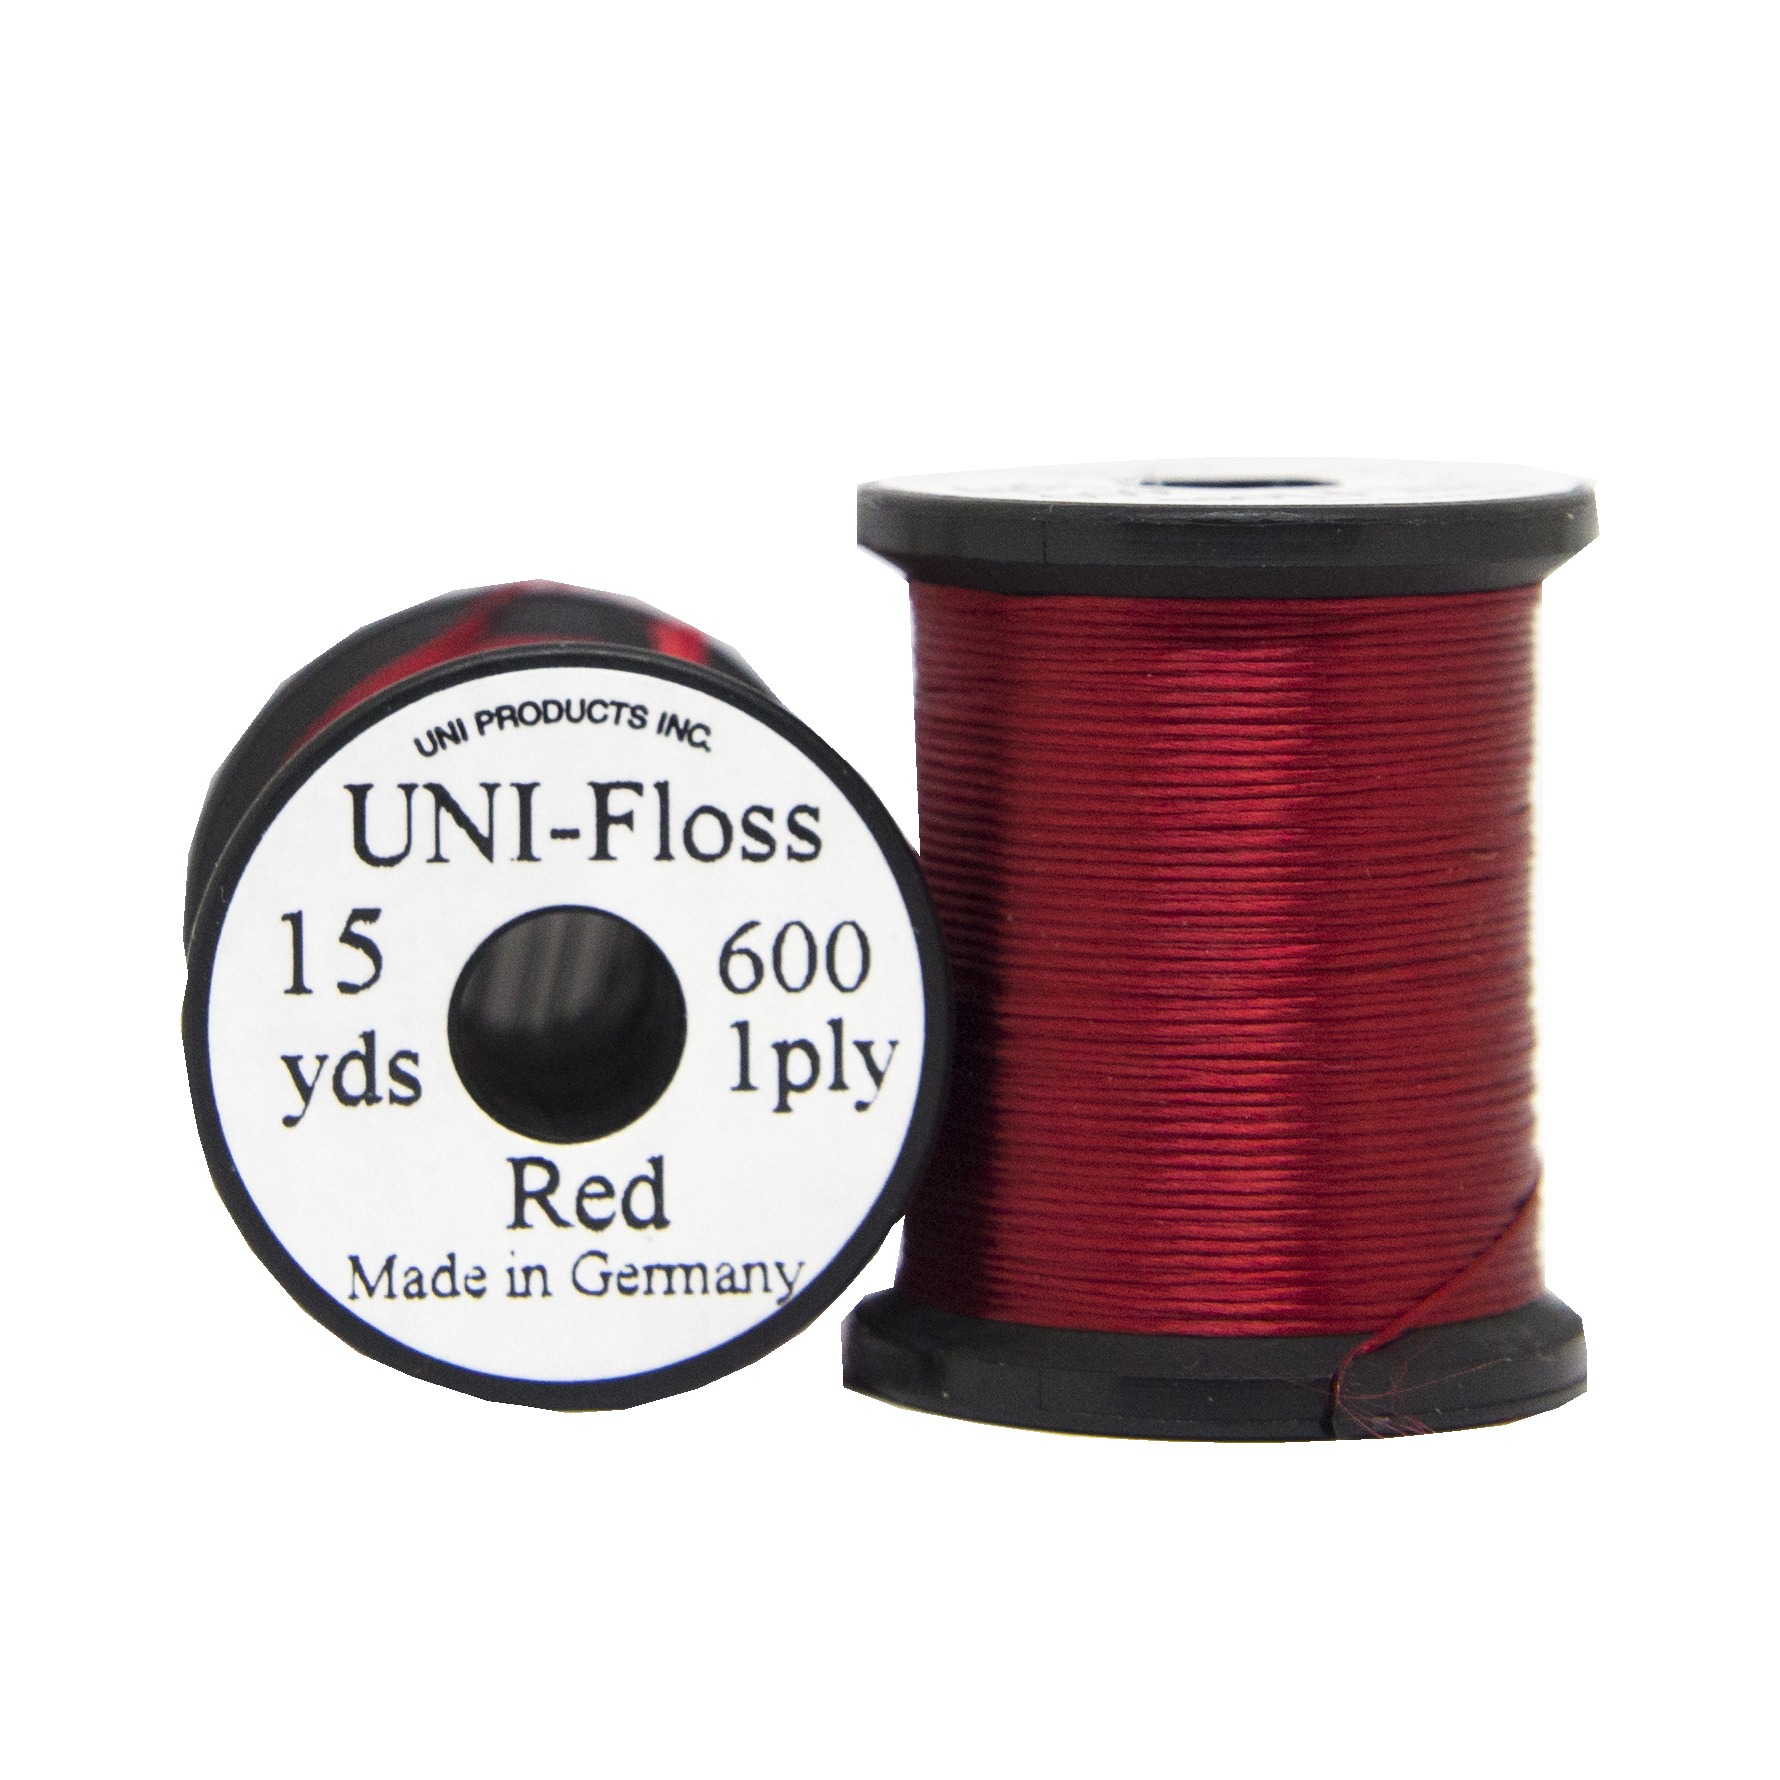 UNI Floss 15yds - Red